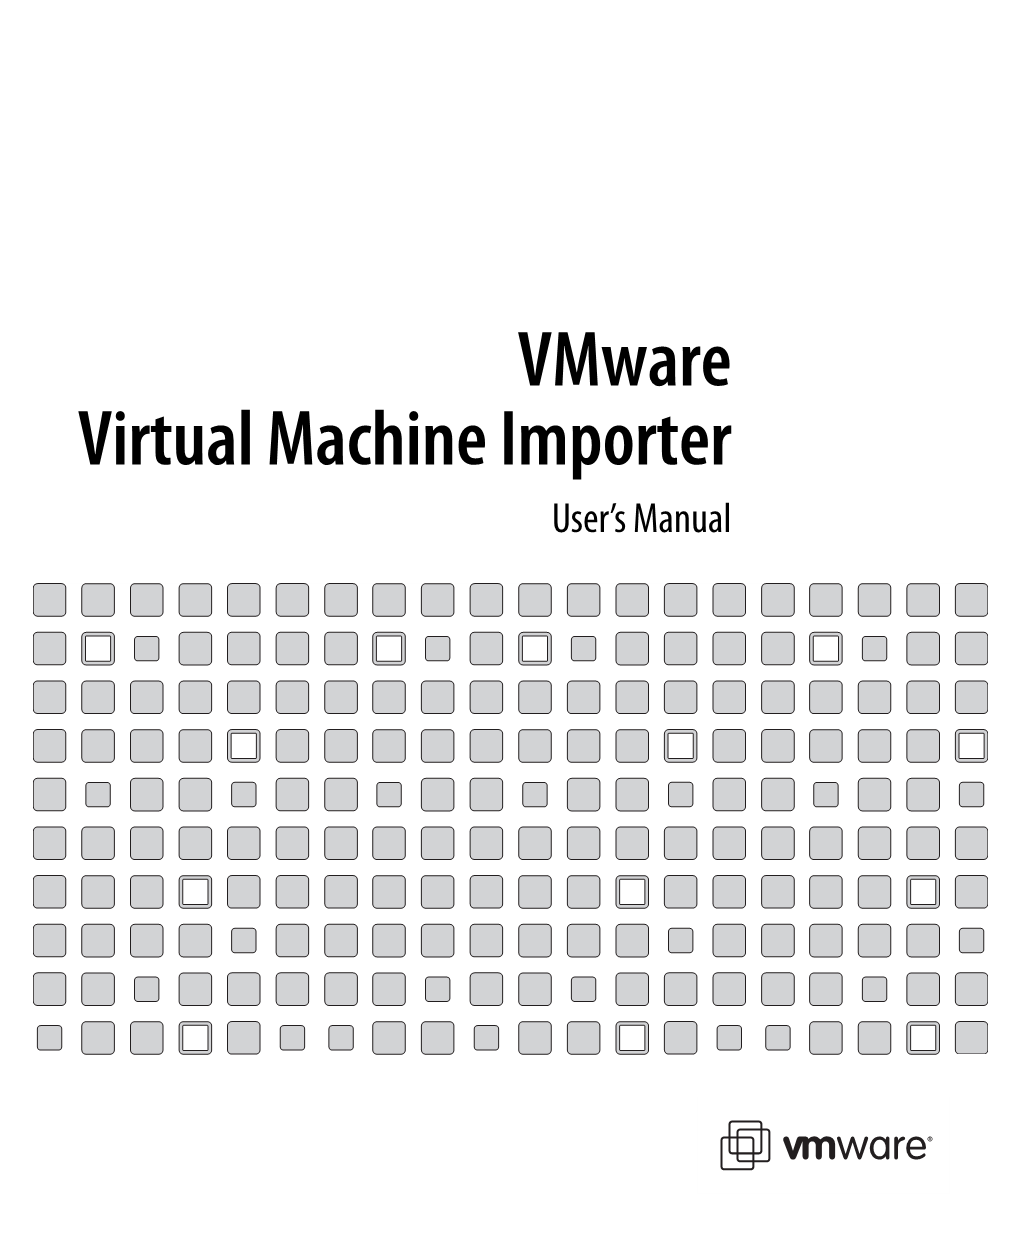 Vmware Virtual Machine Importer User's Manual